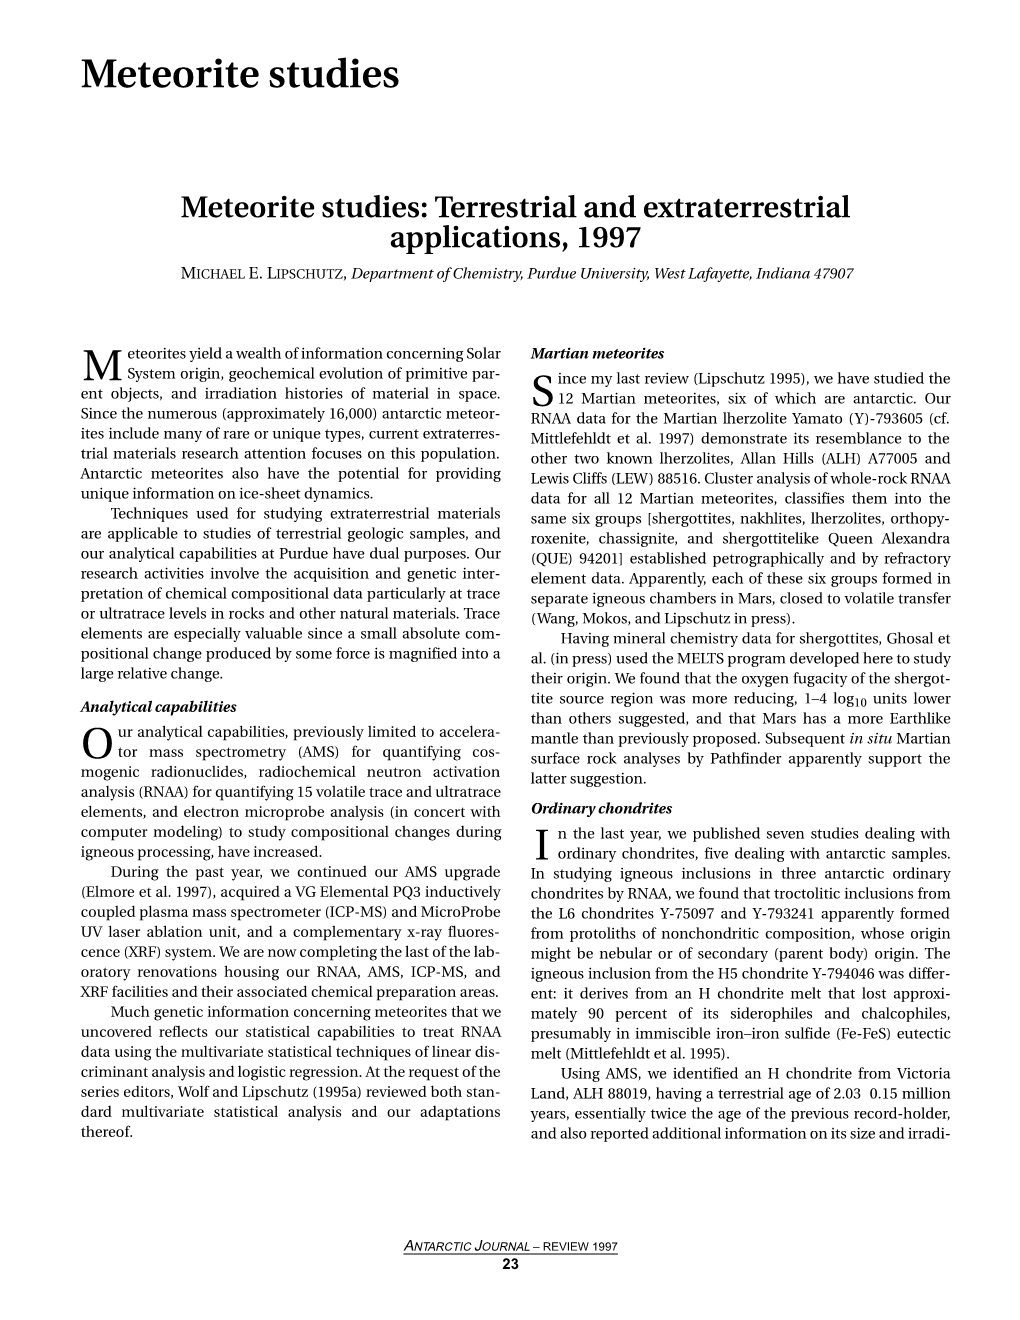 Meteorite Studies: Terrestrial and Extraterrestrial Applications, 1997 MICHAEL E